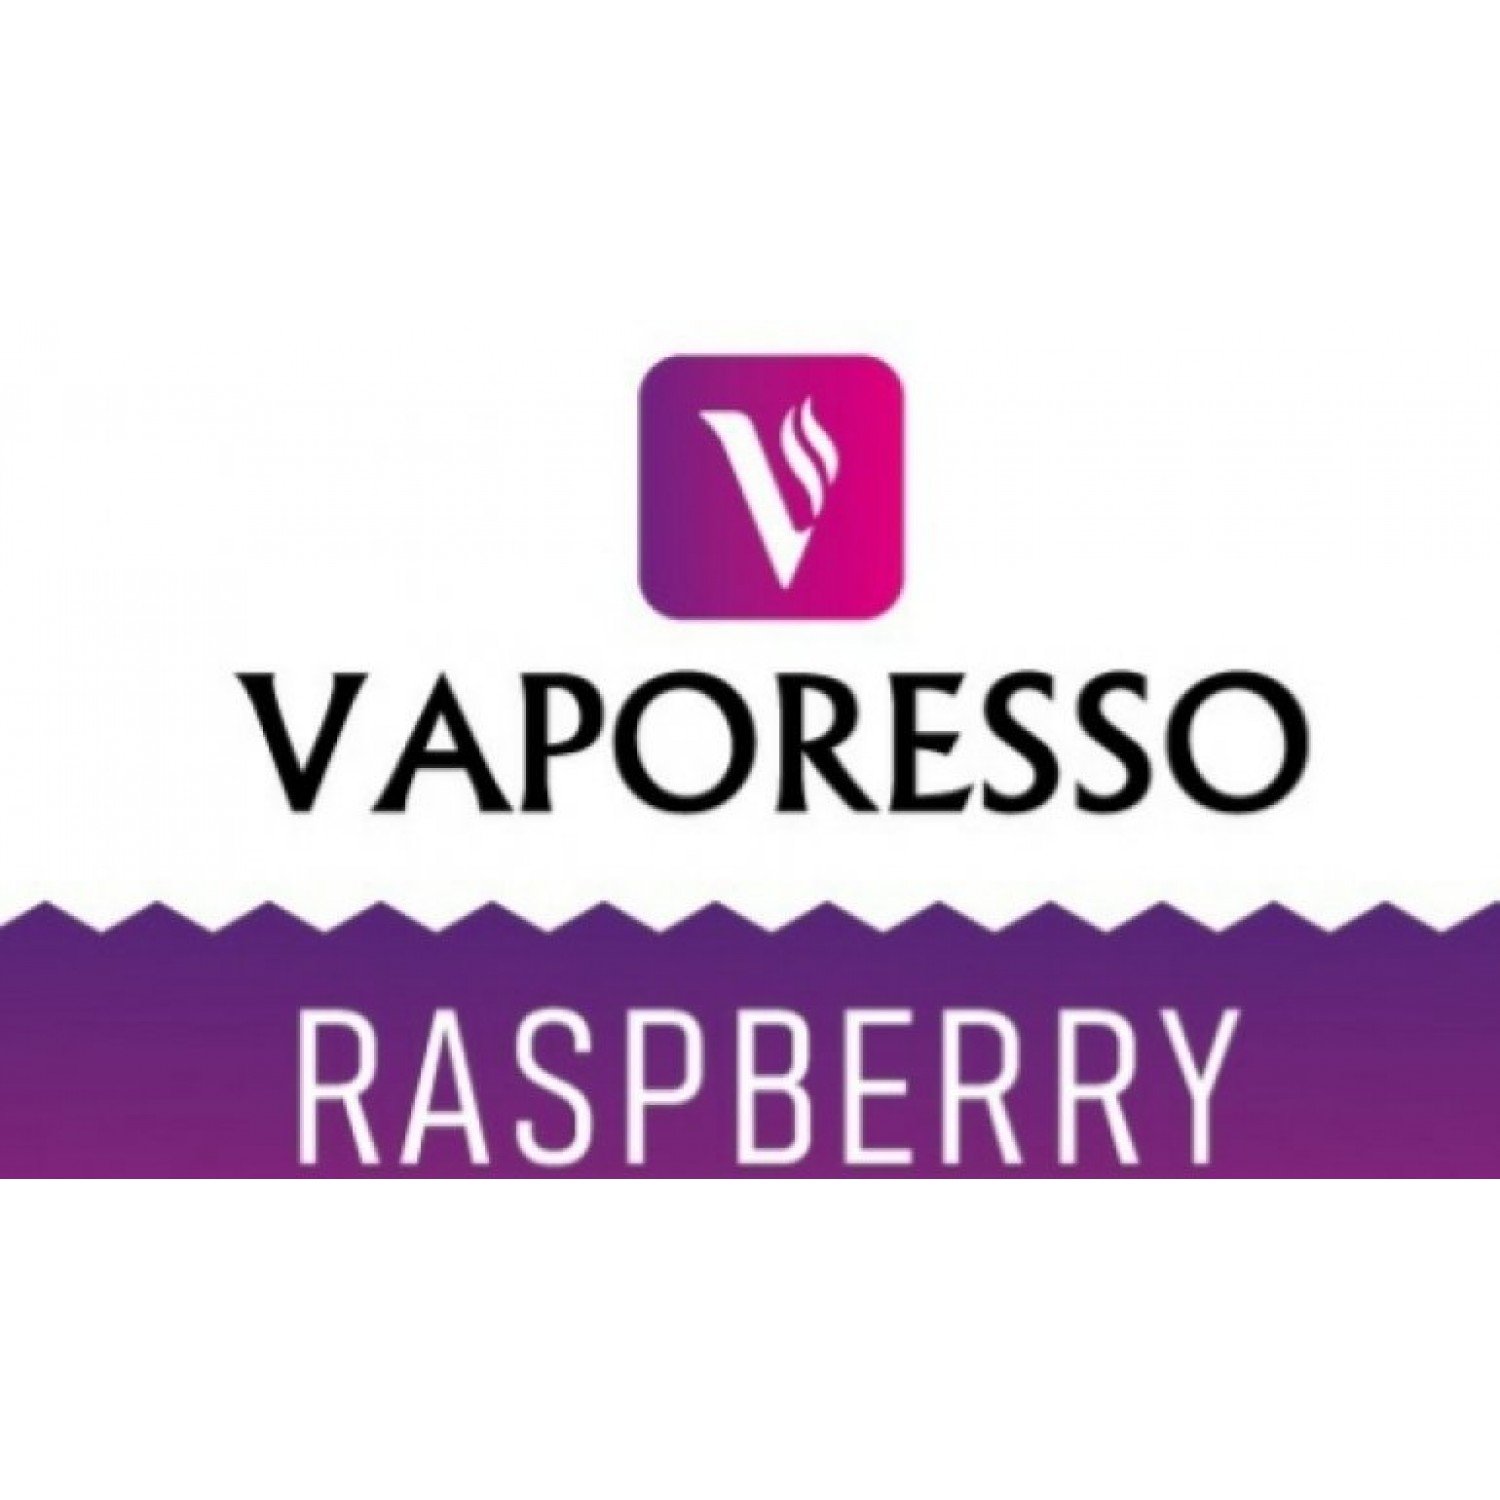 Vaporesso - Rapsberry 30 ml Elektronik Sigara Likiti